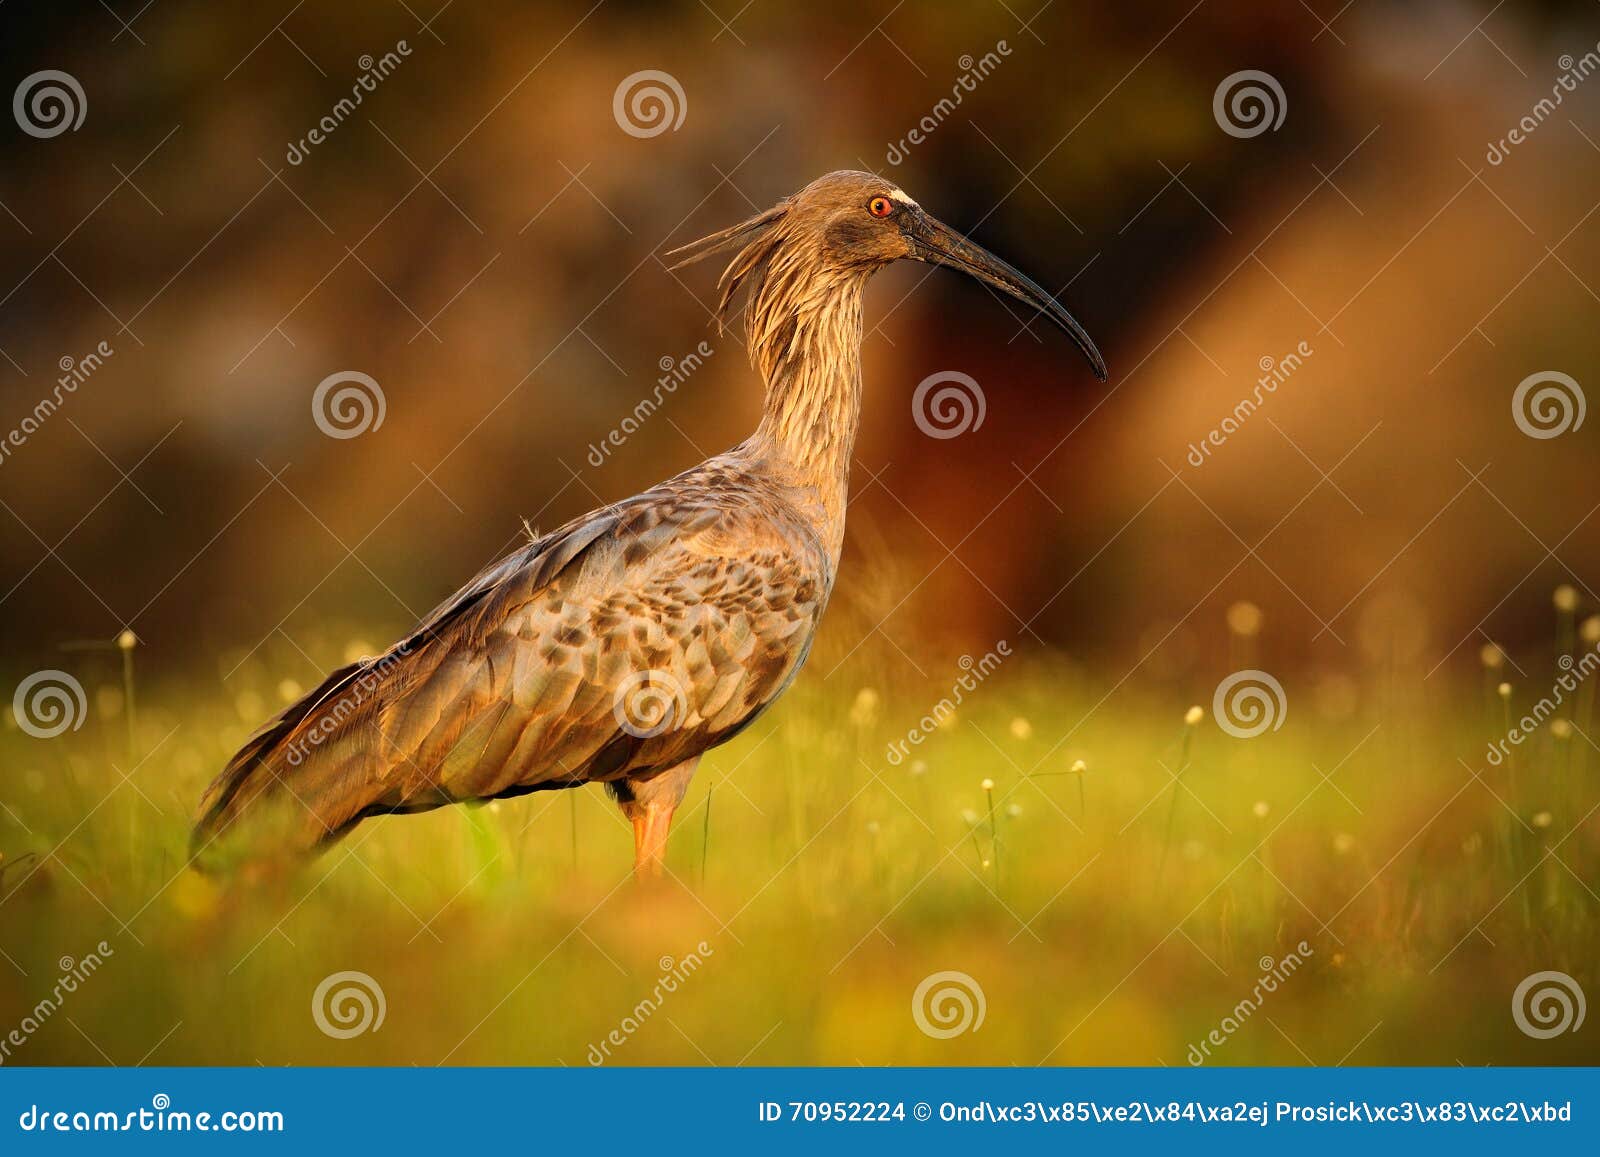 plumbeous ibis, theristicus caerulescens, exotic bird in the nature habitat, bird sitting in grass with beautiful evening sun